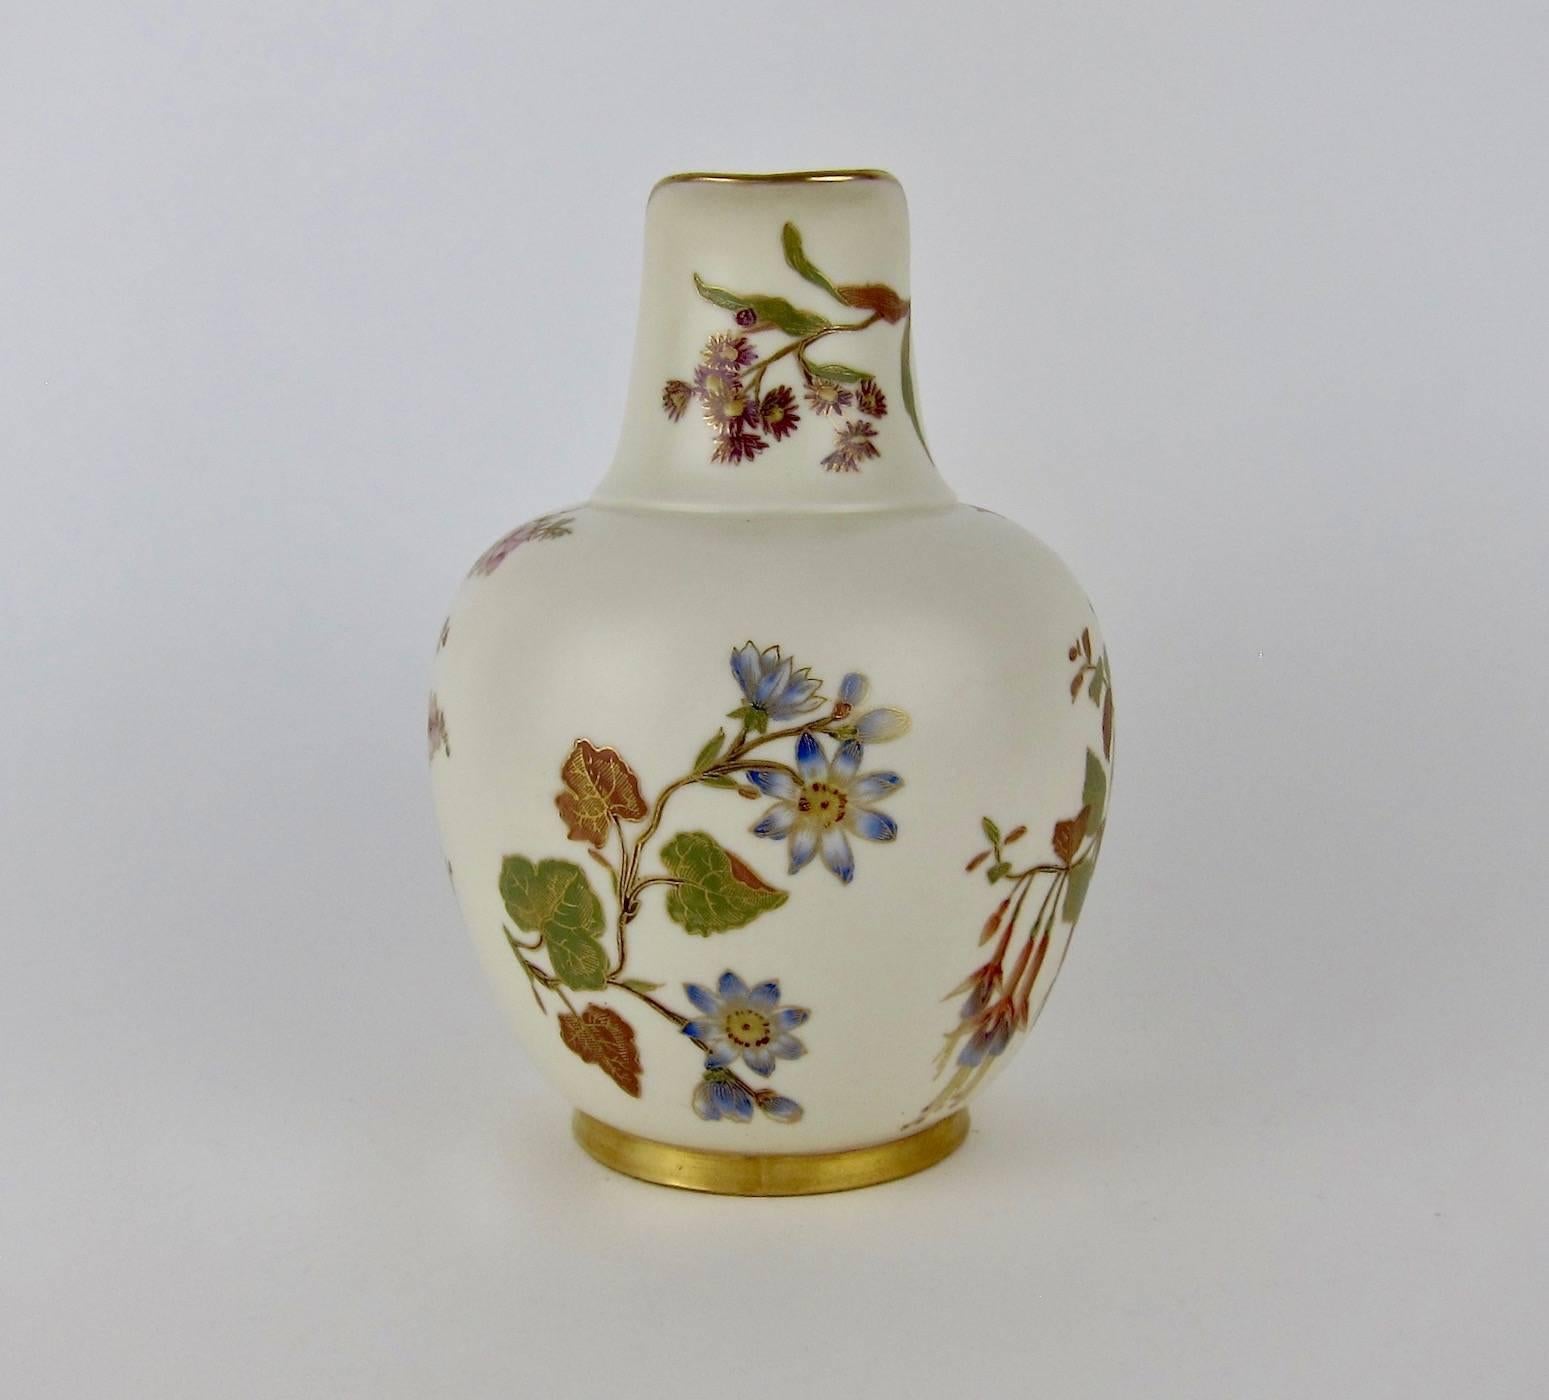 Ceramic Antique English Royal Worcester Porcelain Hand-Painted Pitcher, 1890